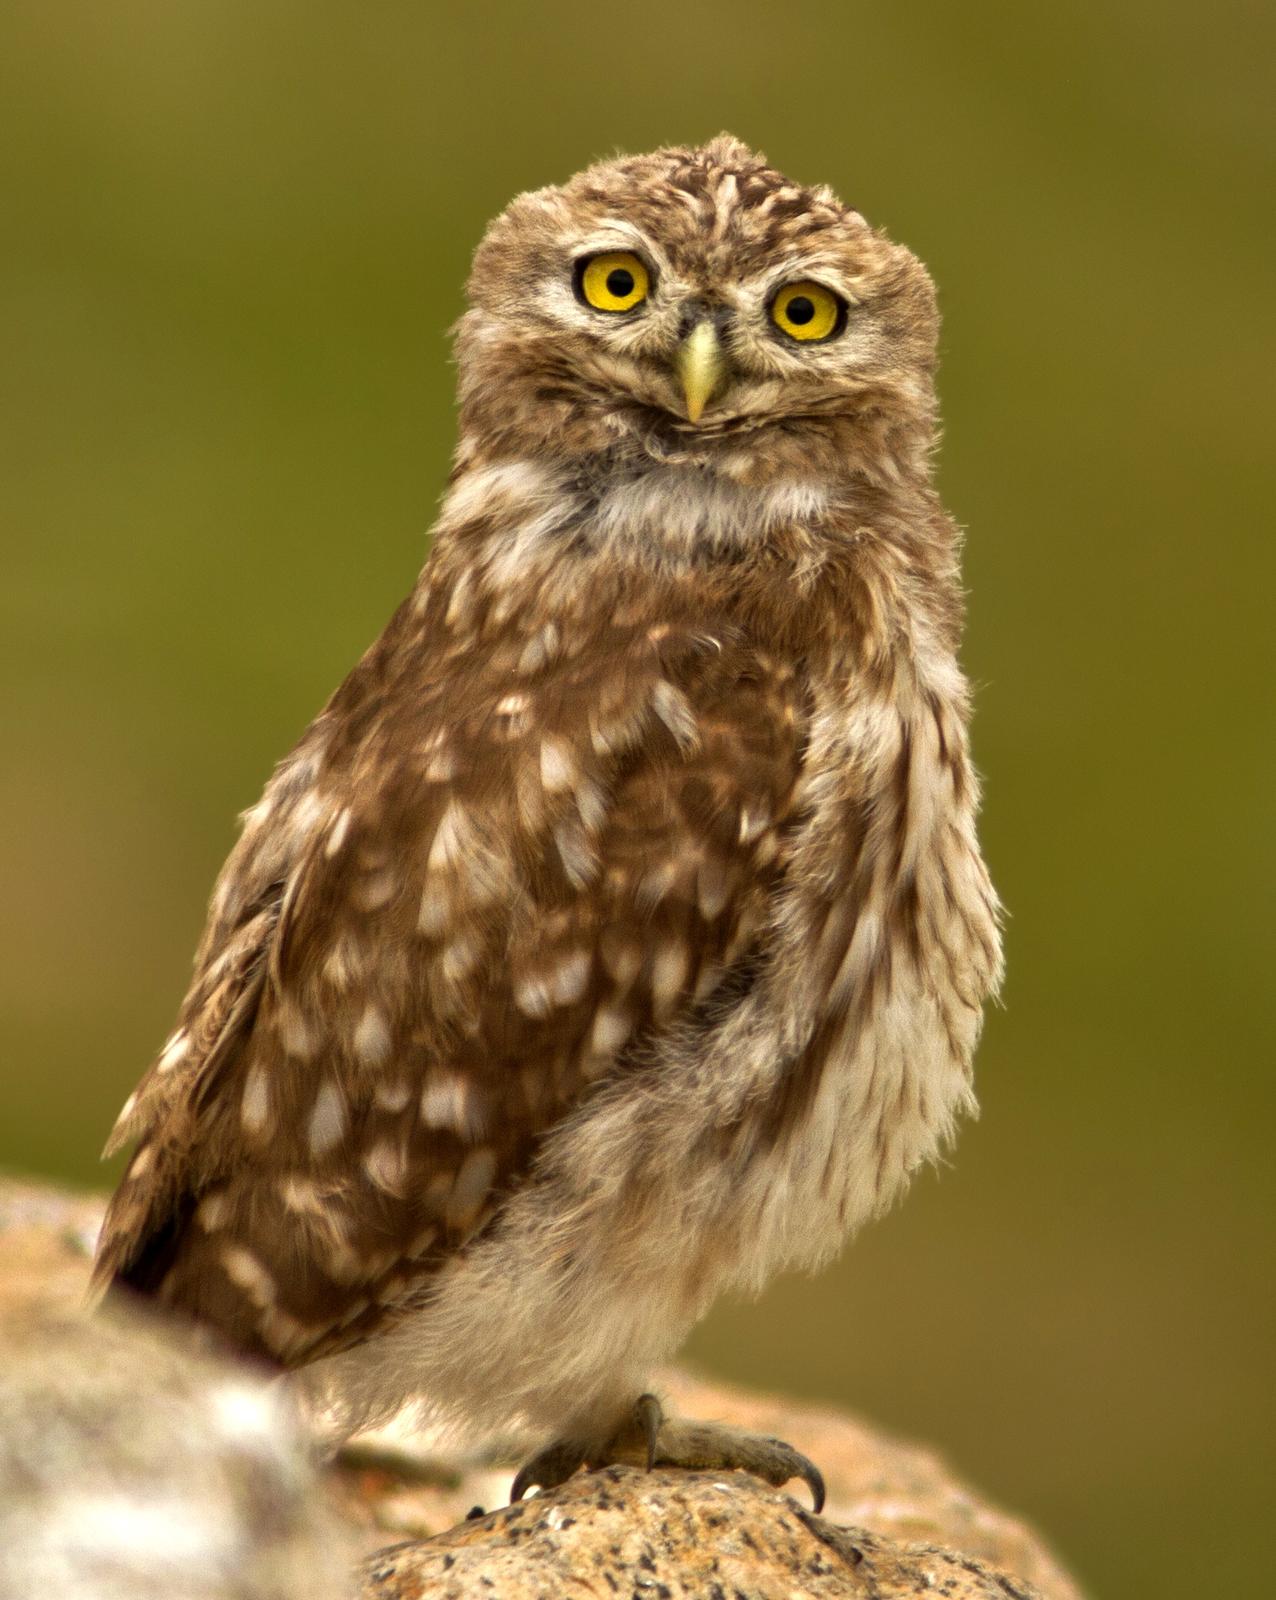 Little Owl Photo by Garima Bhatia